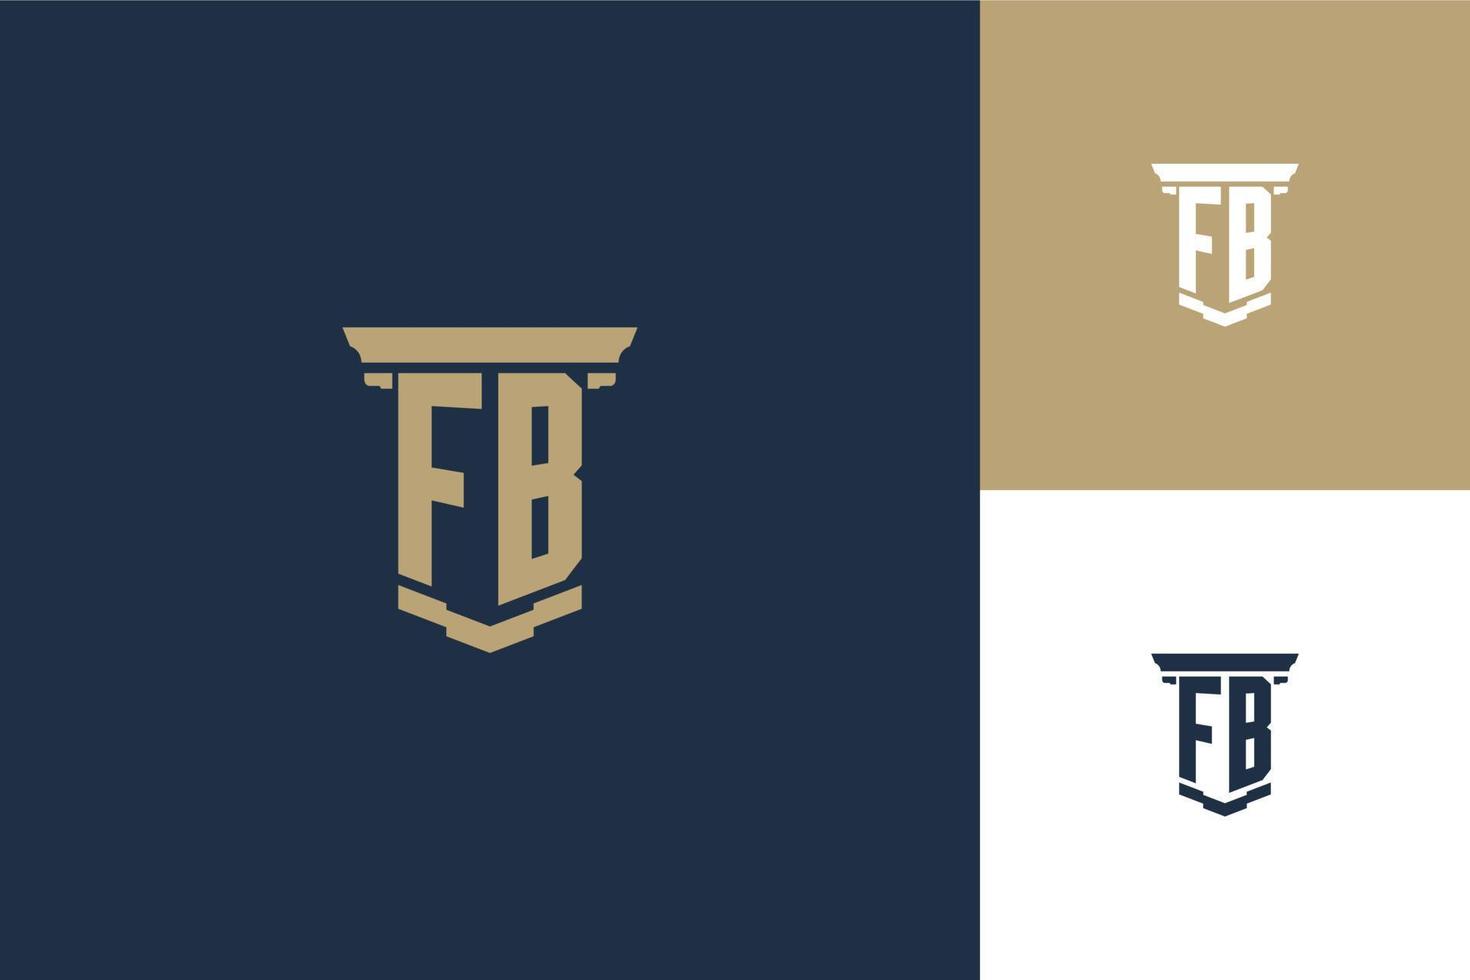 fb monogram initialer logotyp design med pelare ikon. advokatlogotypdesign vektor